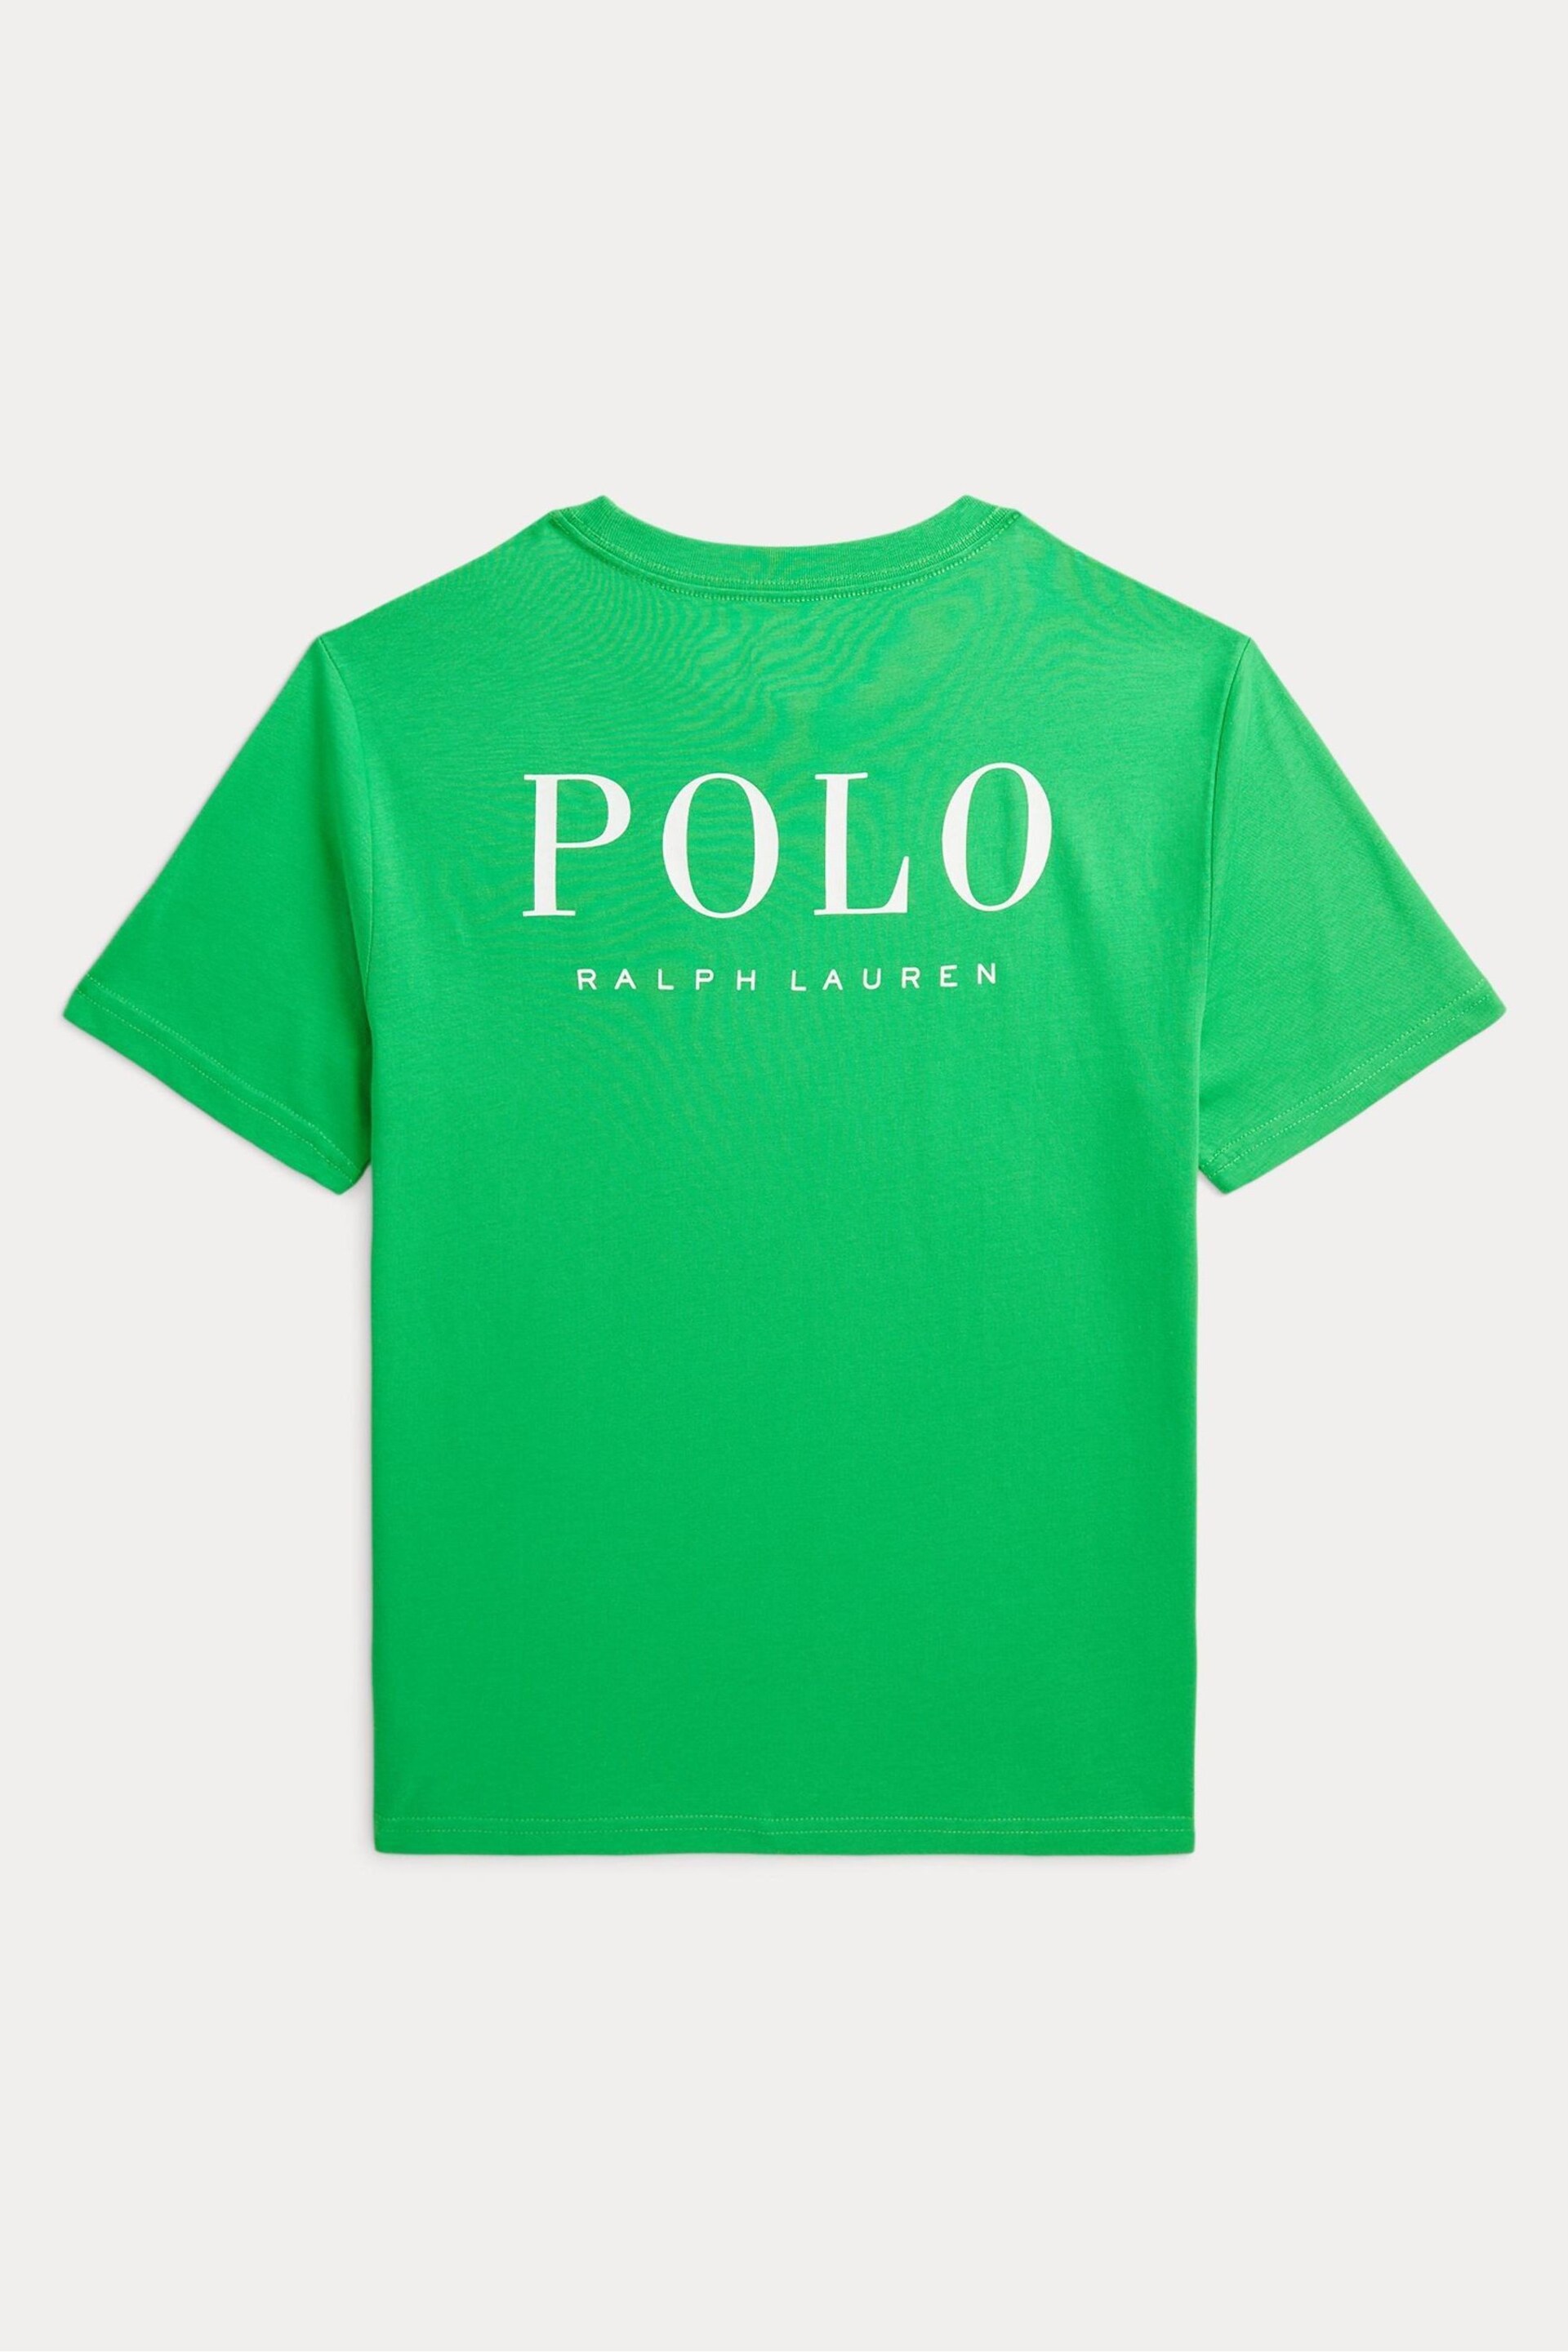 Polo Ralph Lauren Boys Logo Cotton Jersey T-Shirt - Image 1 of 2